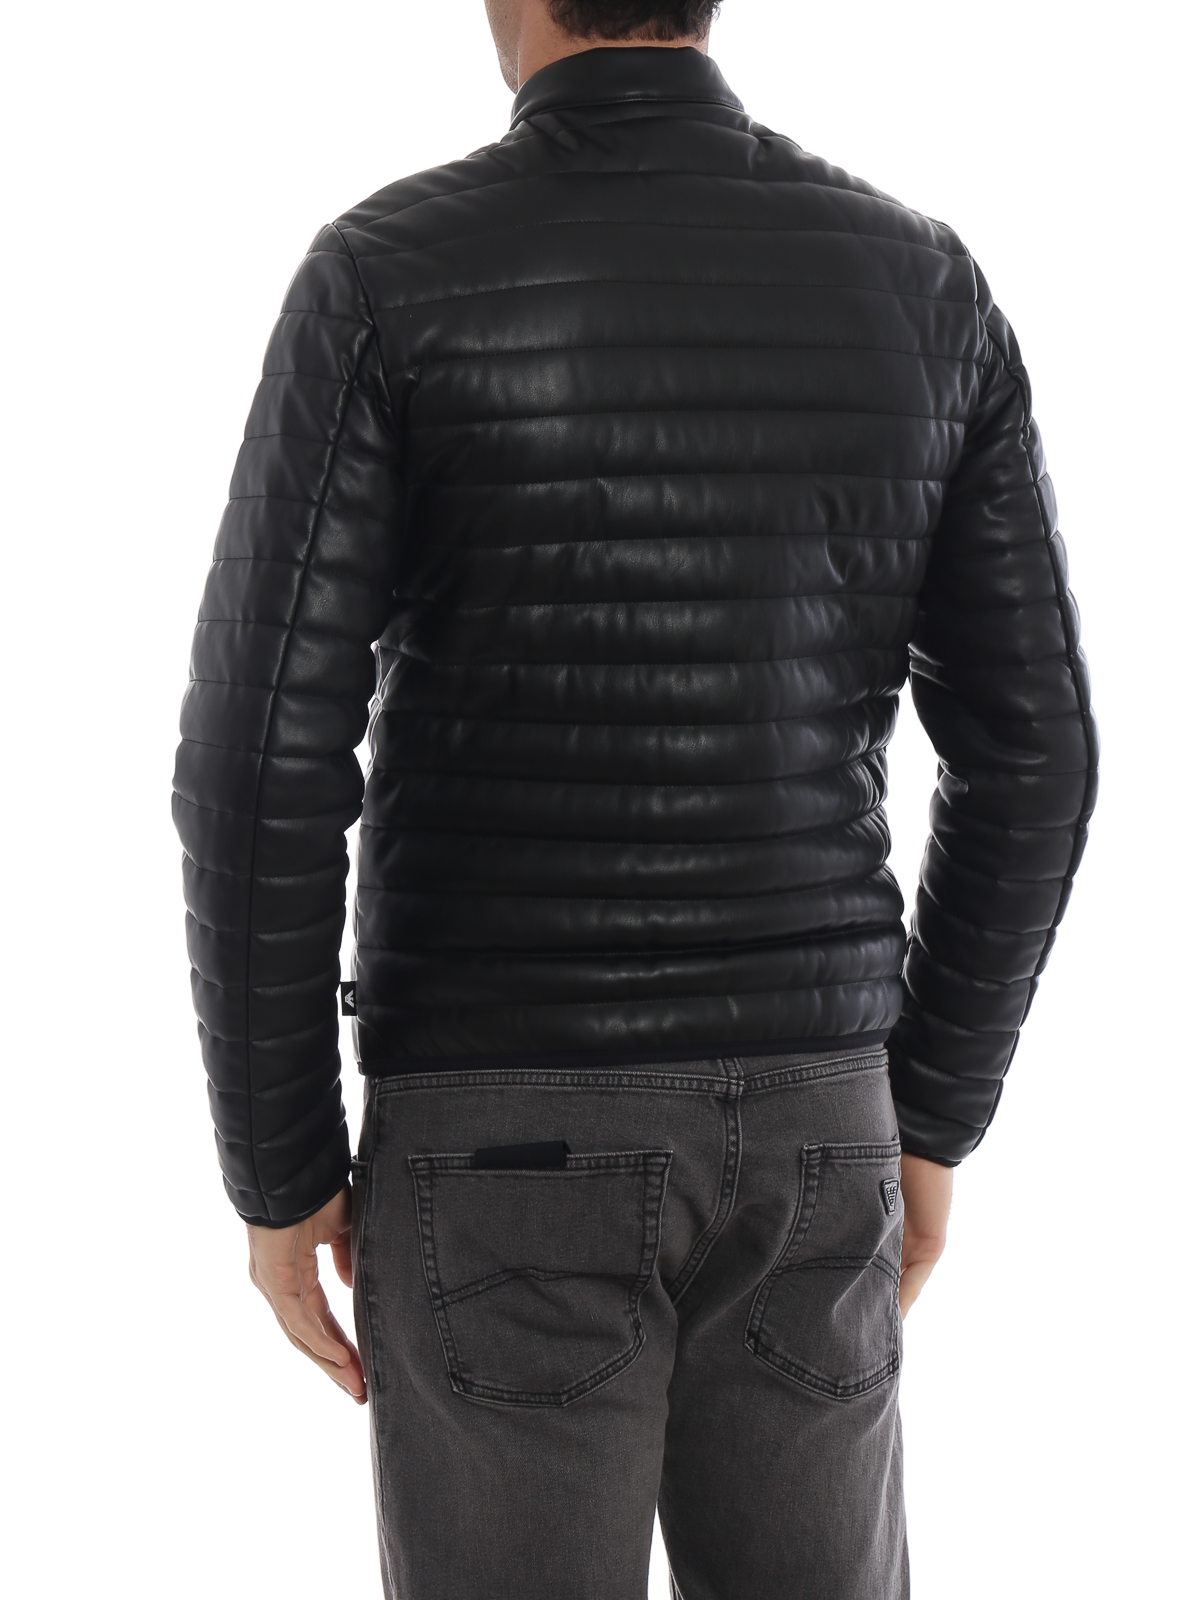 armani leather jackets